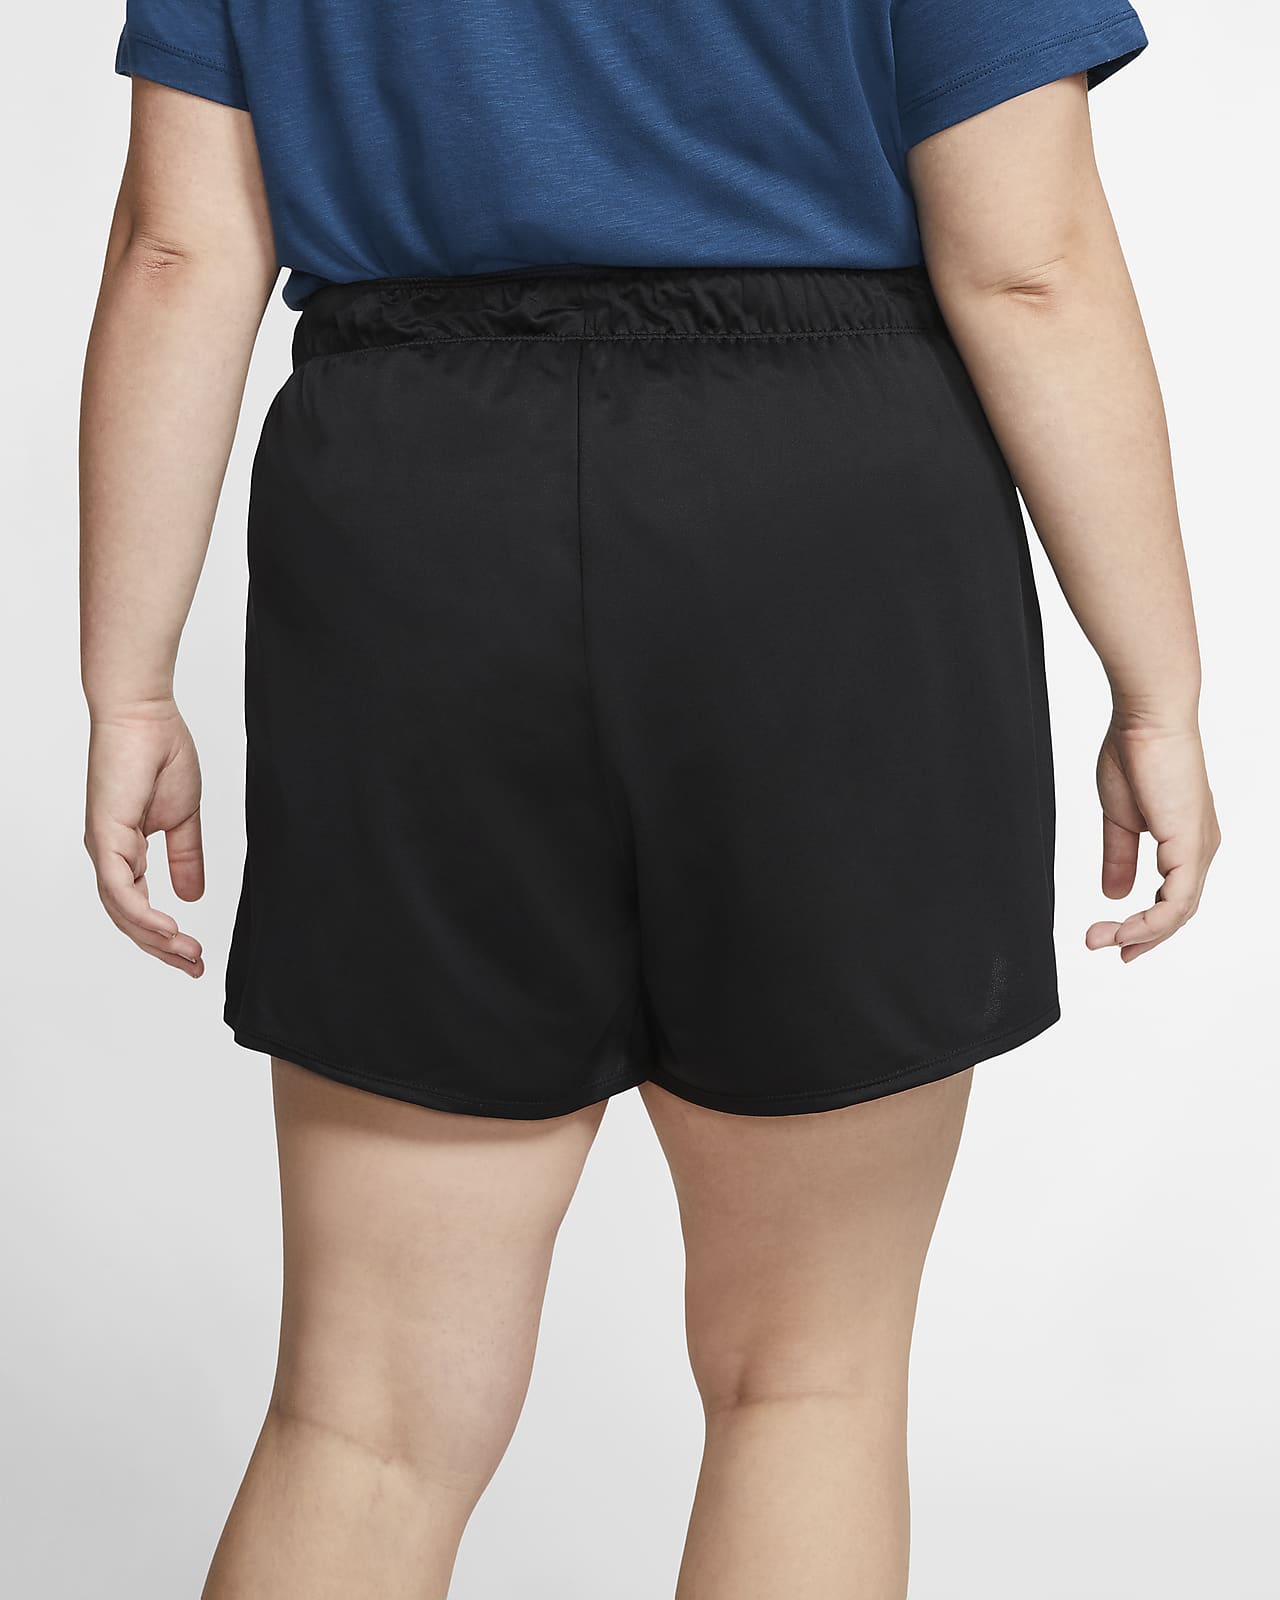 women's plus size dri fit shorts